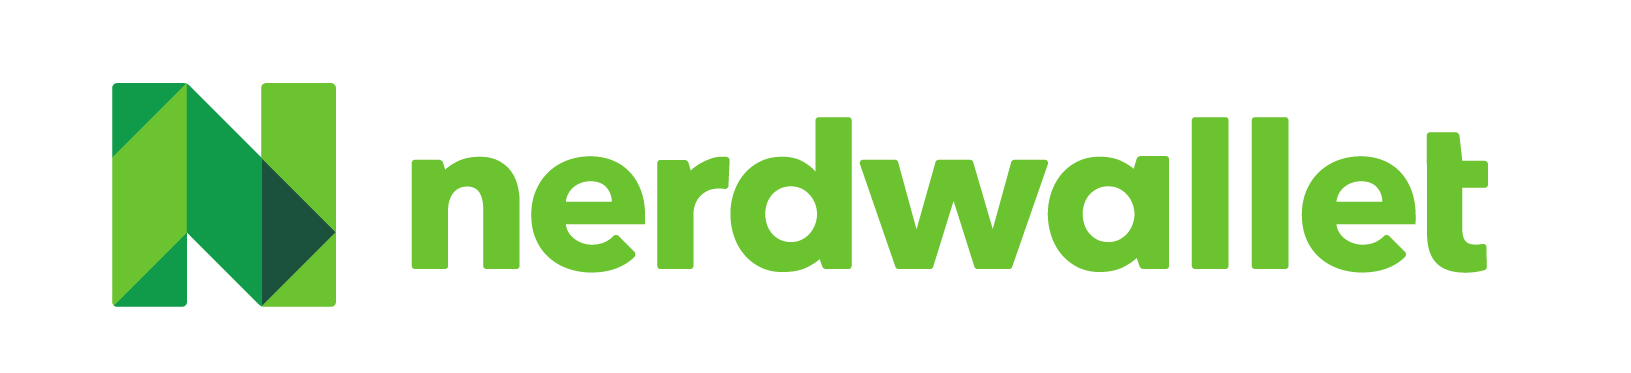 Nerdwallet_Horizontal_Logo